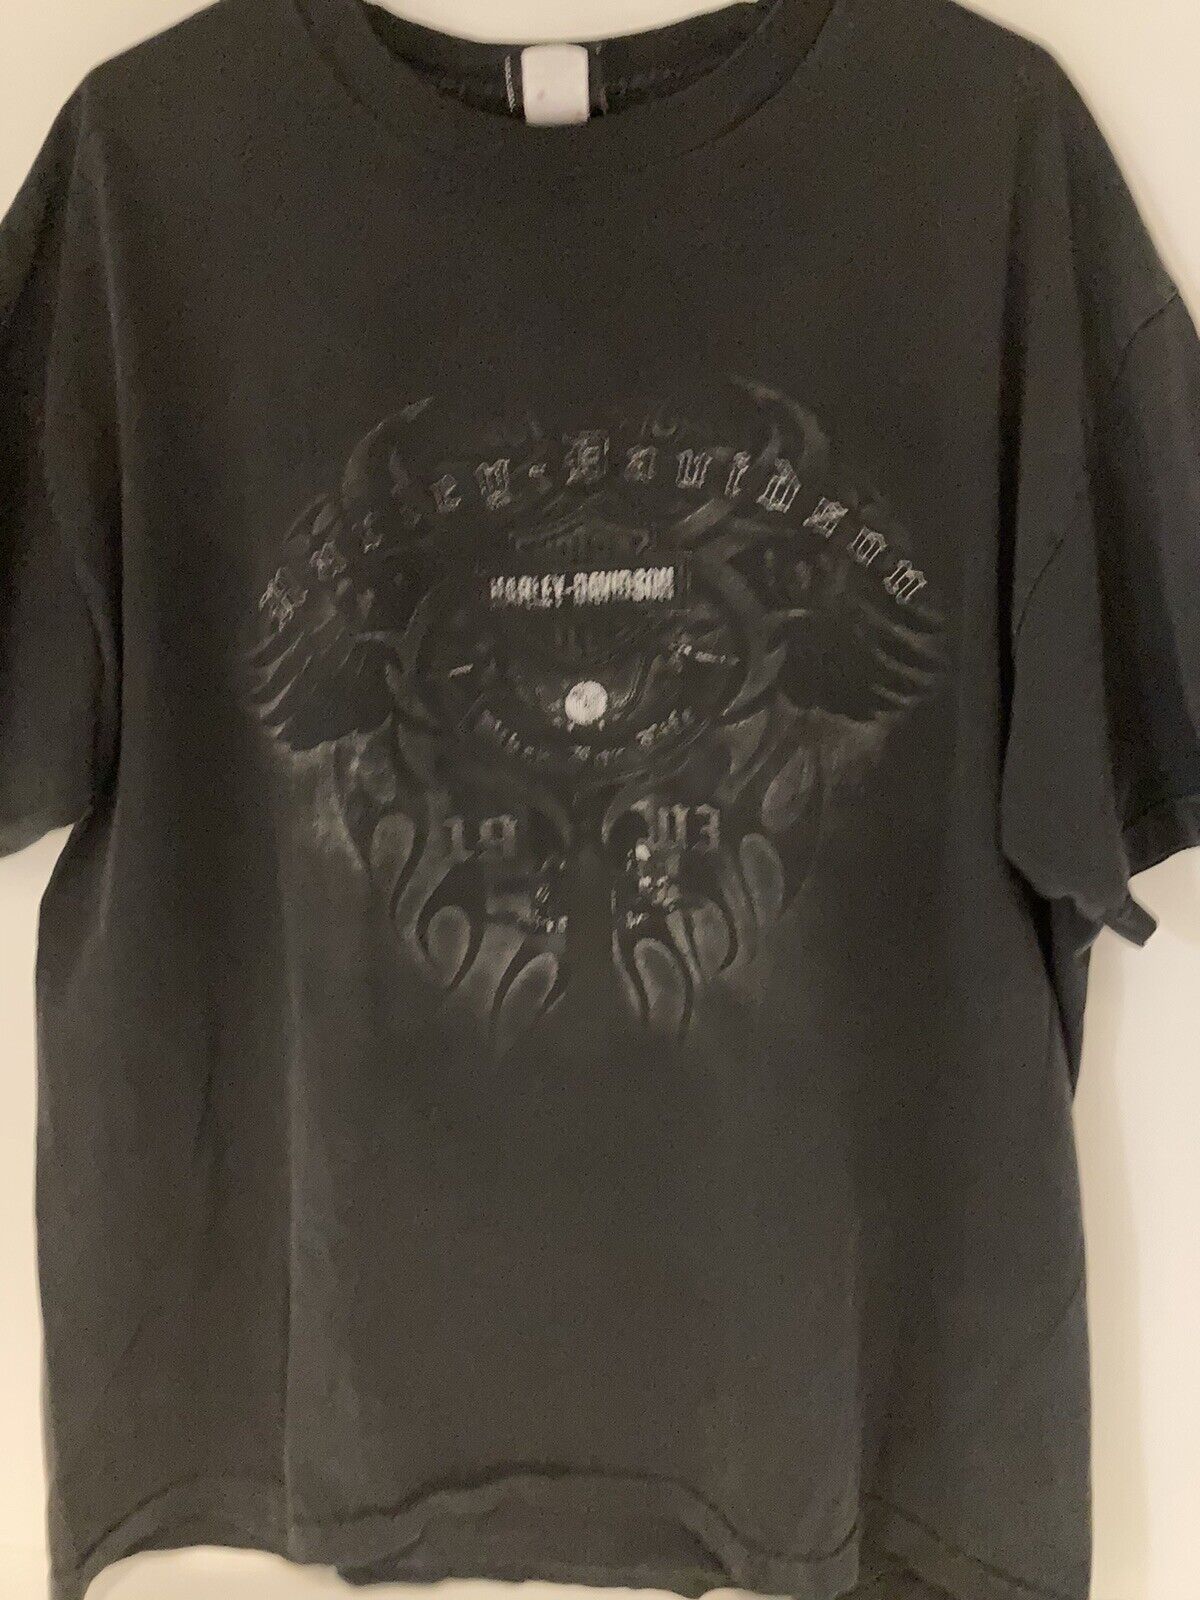 Harley Davidson Men’s XL Black T-Shirt “Independense College Station, TX”